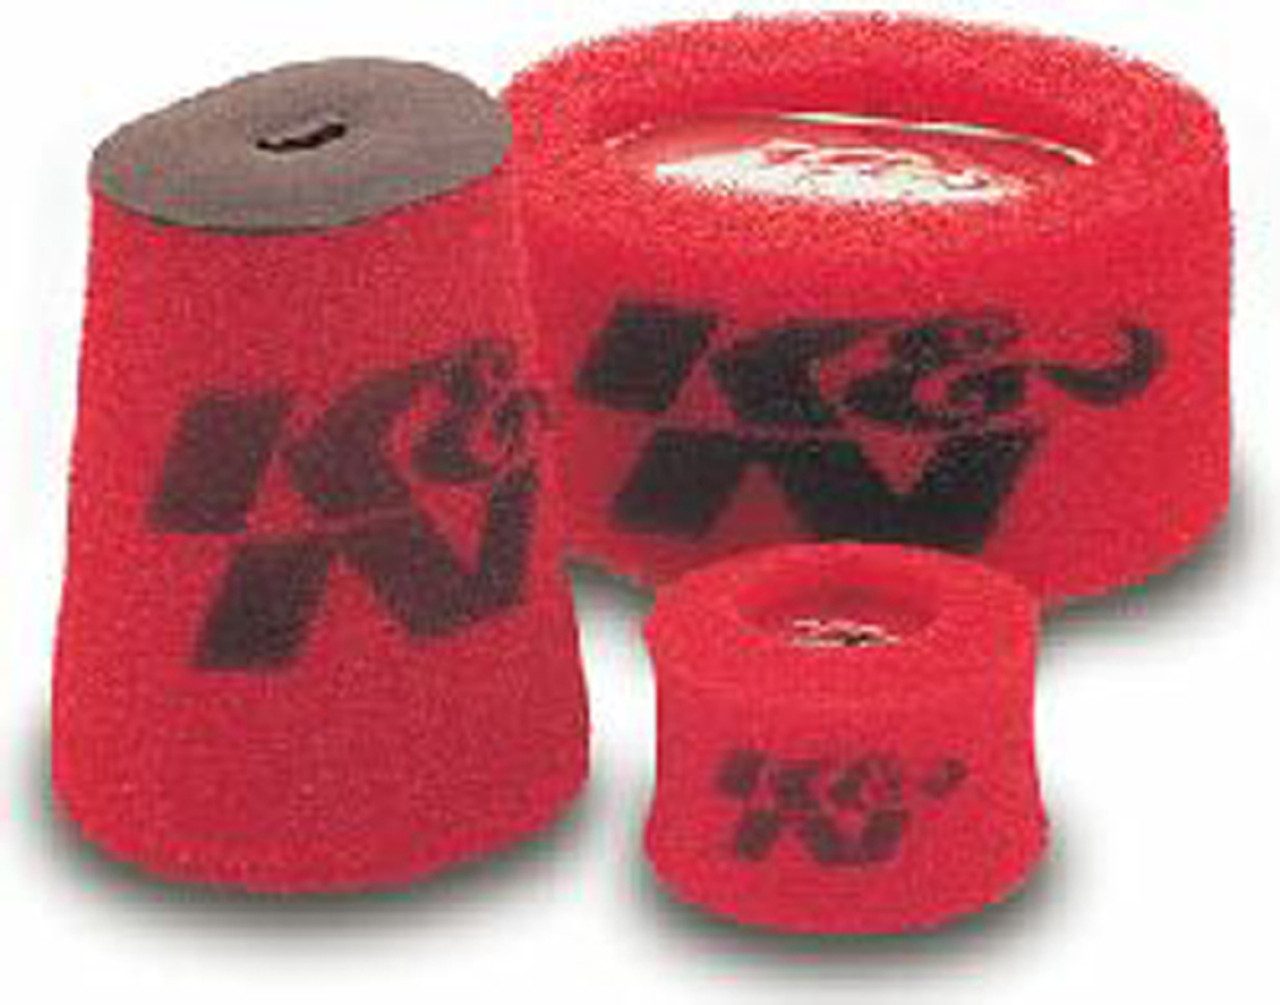 K&N Air Filter Precleaner Wrap 14in x 6in - 25-3770 Photo - Primary